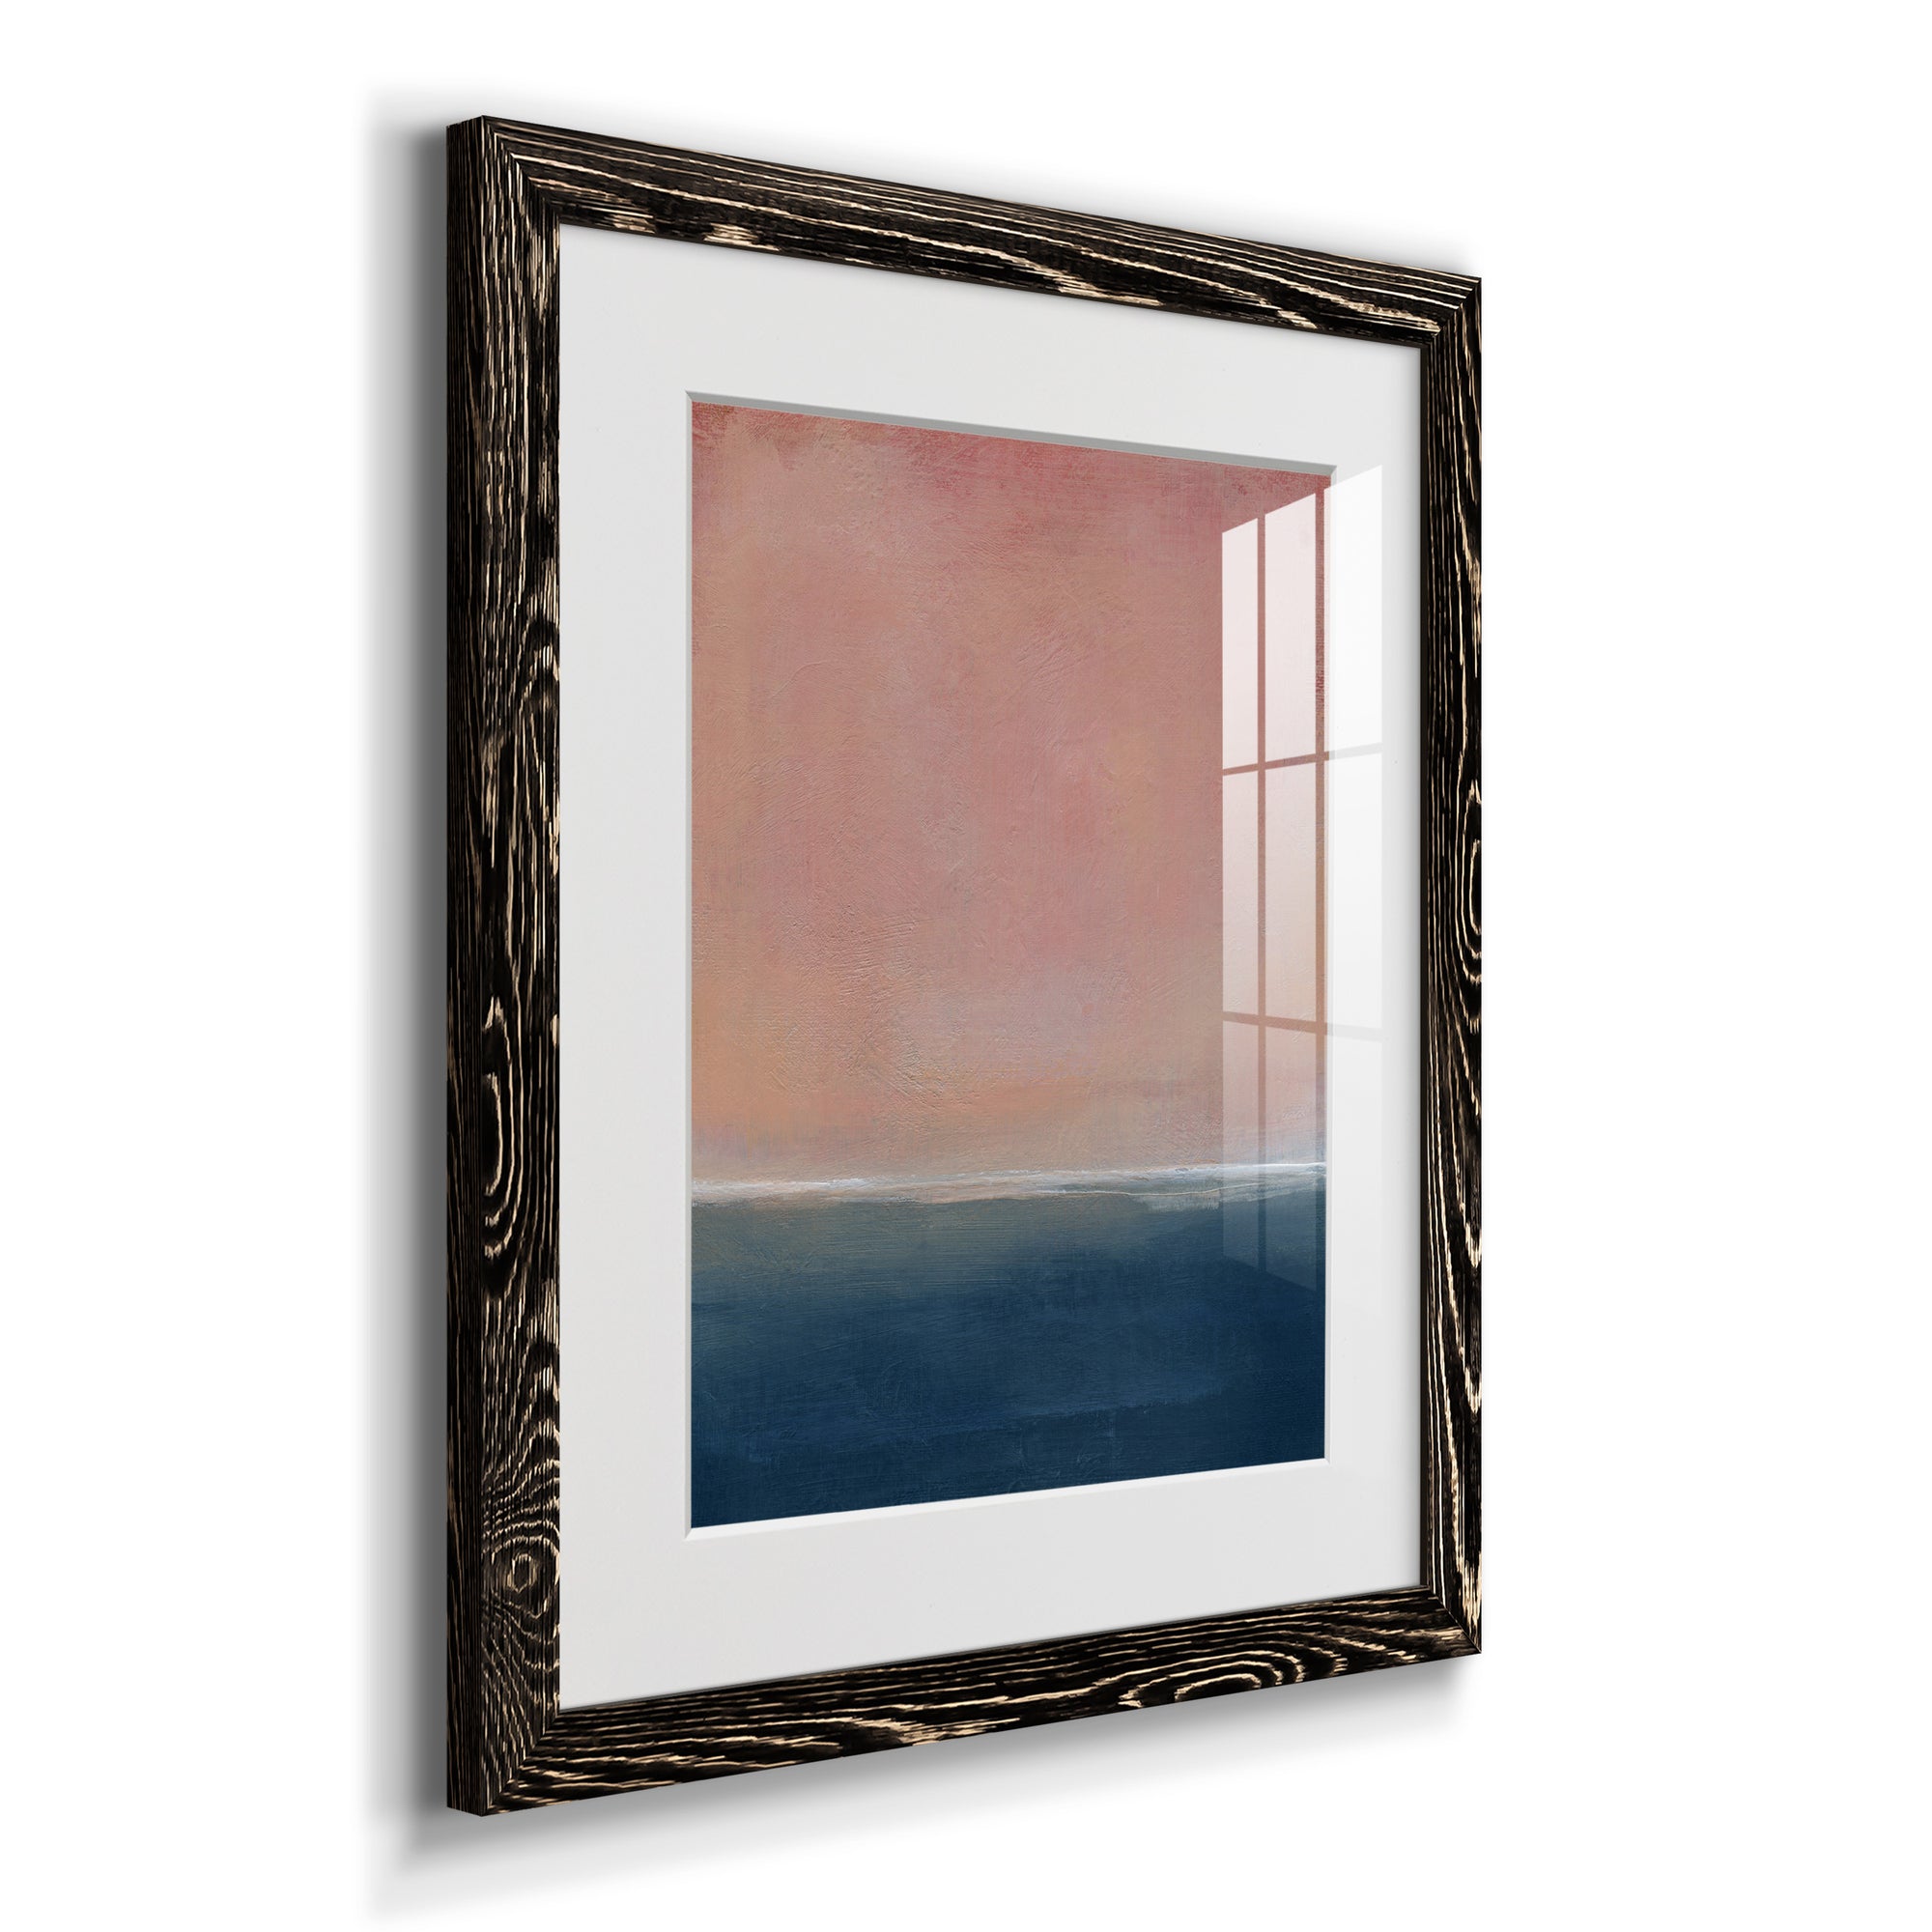 Sunset - Premium Framed Print - Distressed Barnwood Frame - Ready to Hang